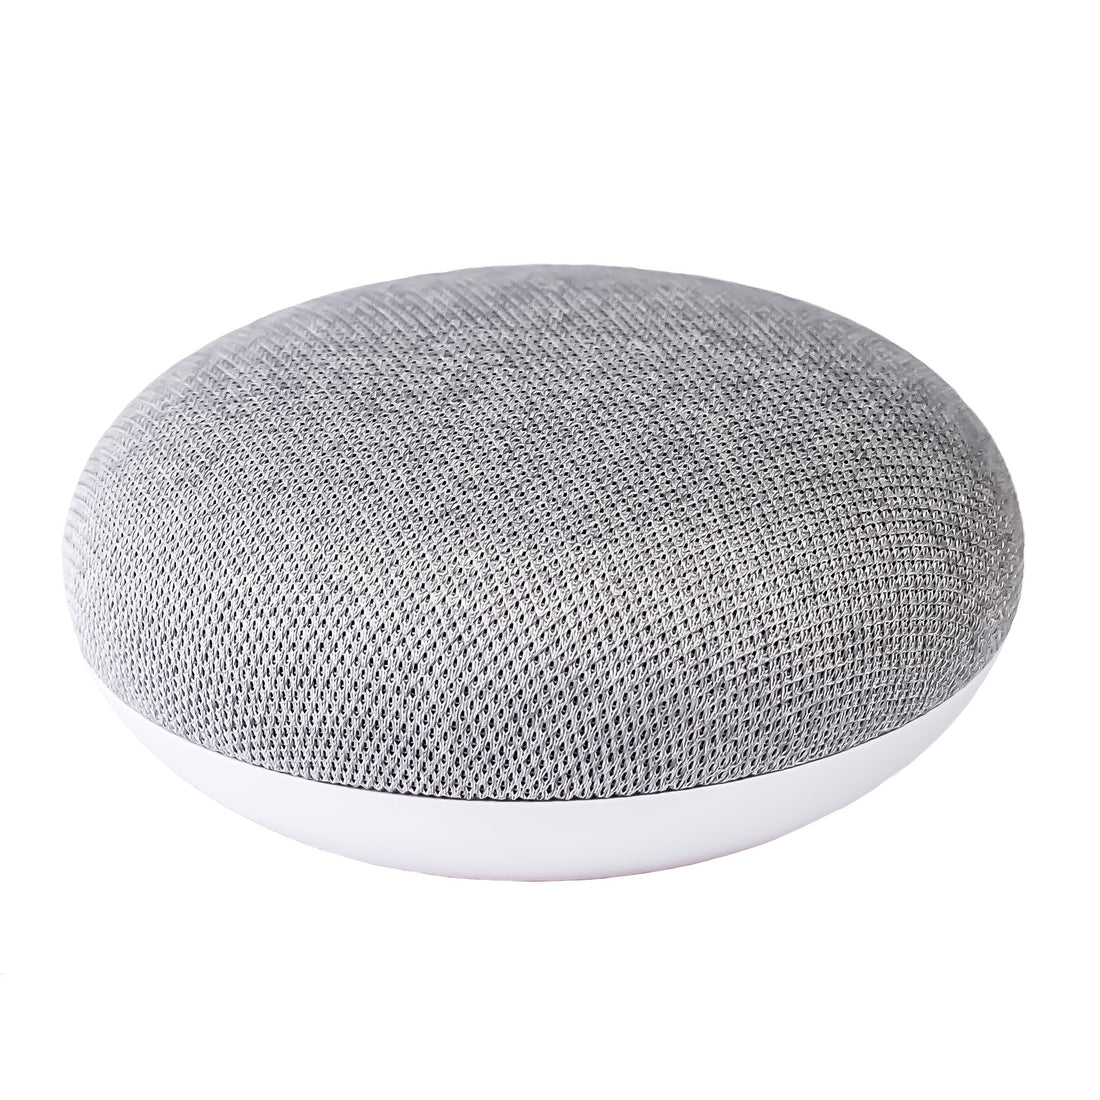 Google Home Mini 1st Gen Smart Speaker with Google Assistant - Chalk (Certified Refurbished)